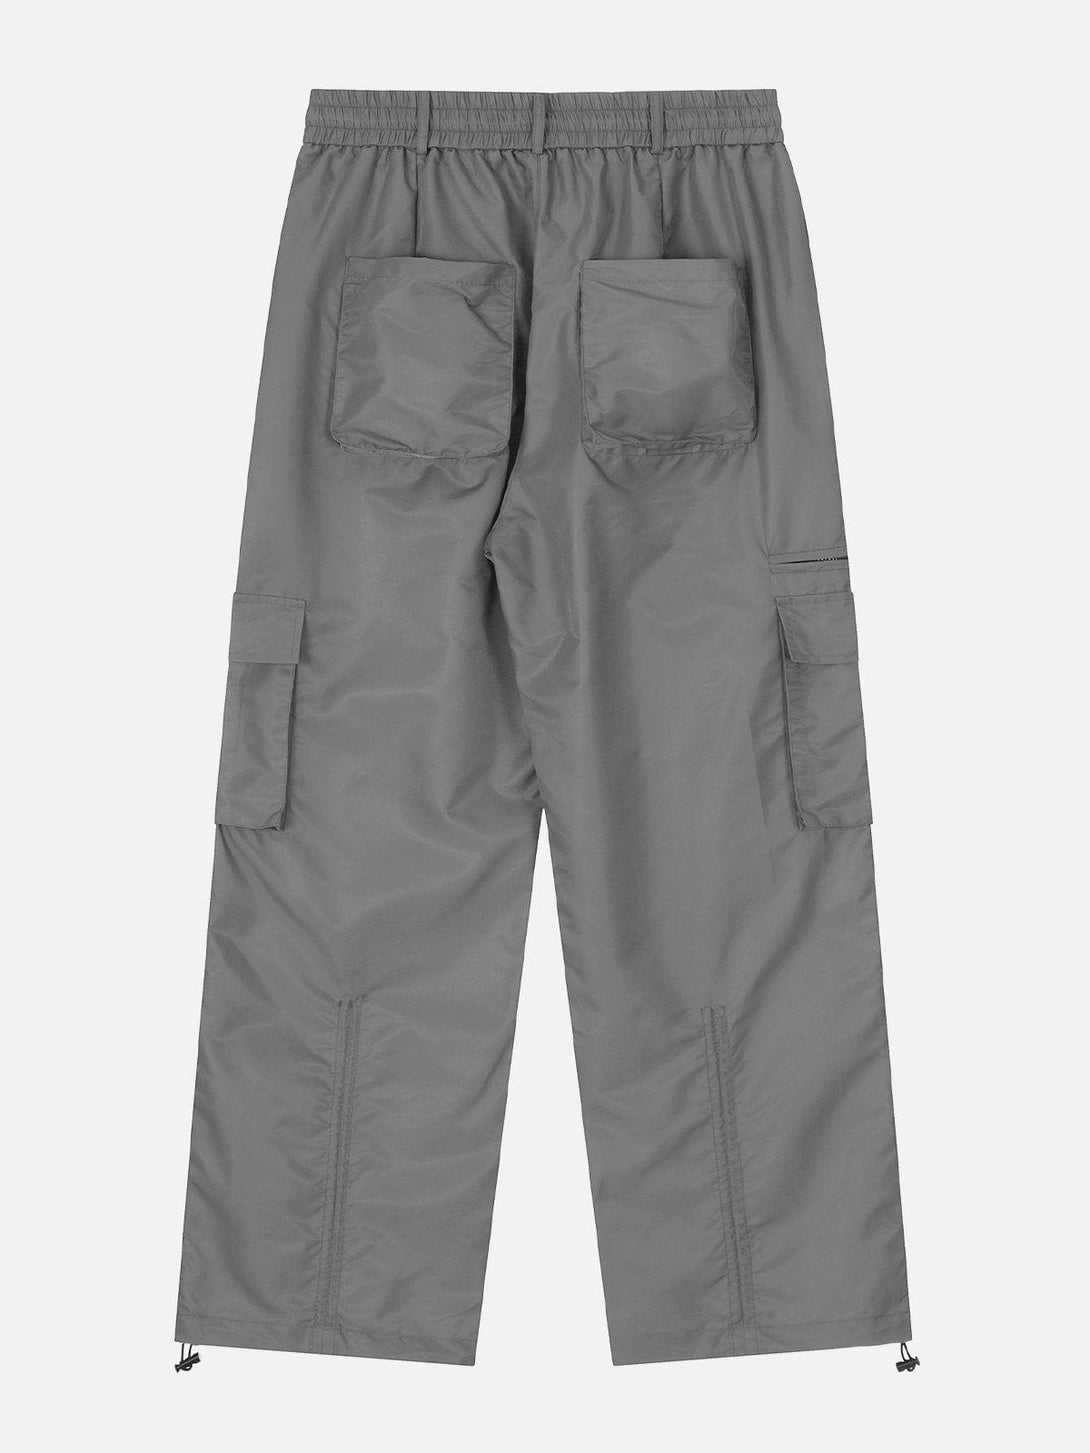 Levefly - Multi-Pocket Cargo Pants - Streetwear Fashion - levefly.com